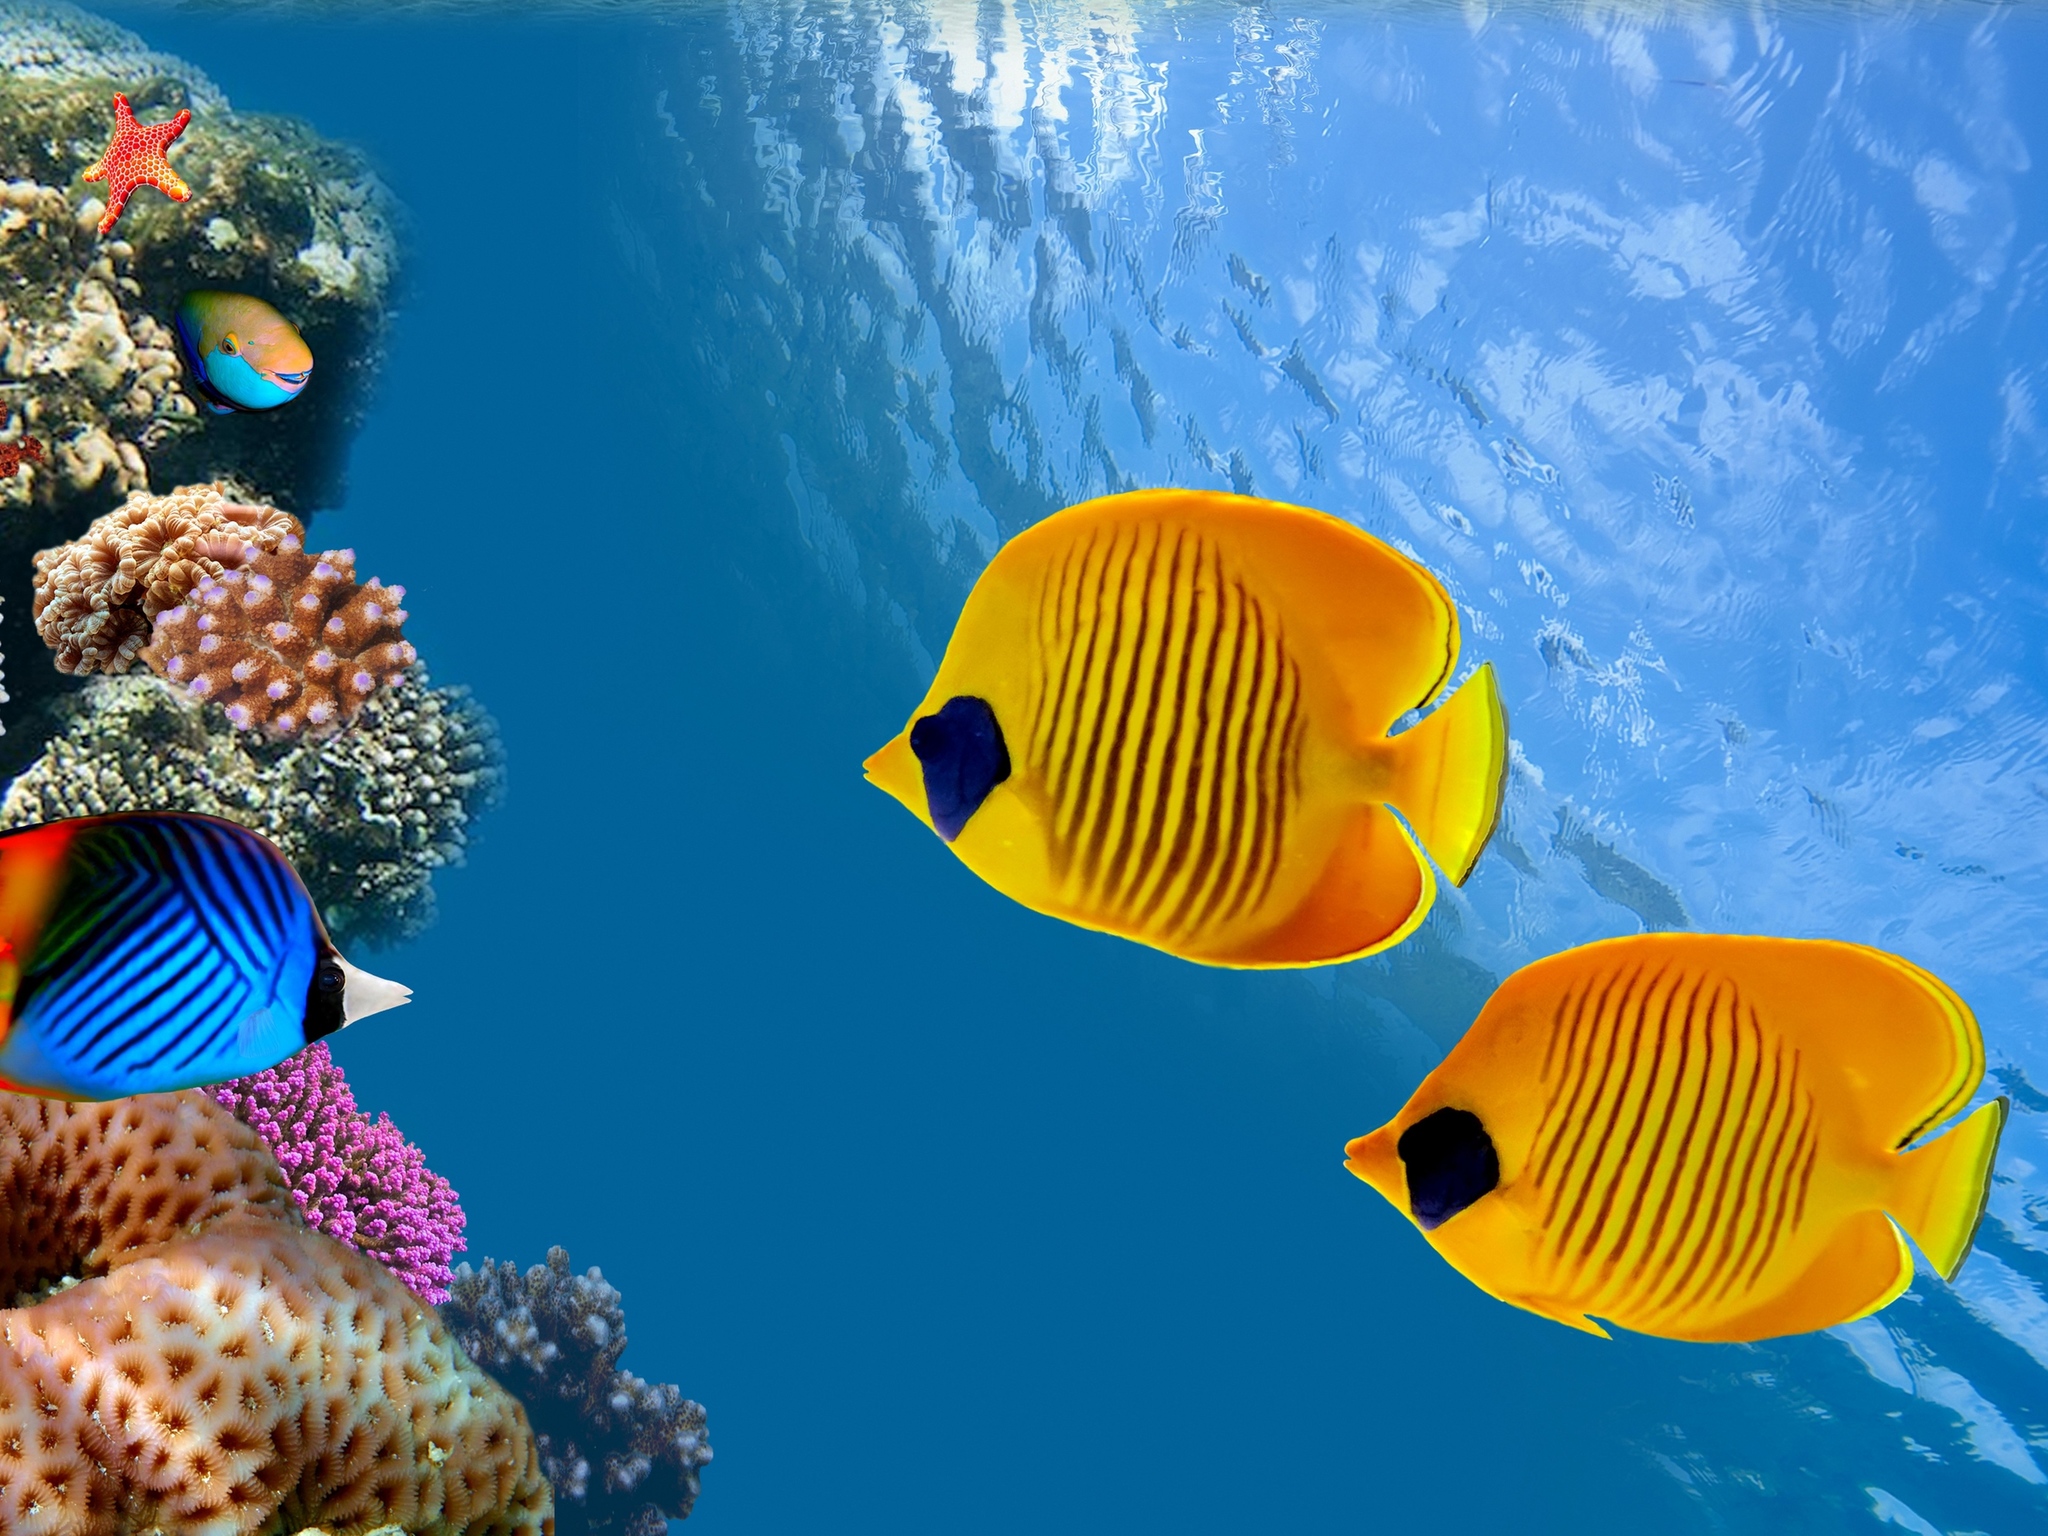 Fish Underwater 4k Ultra HD Wallpaper